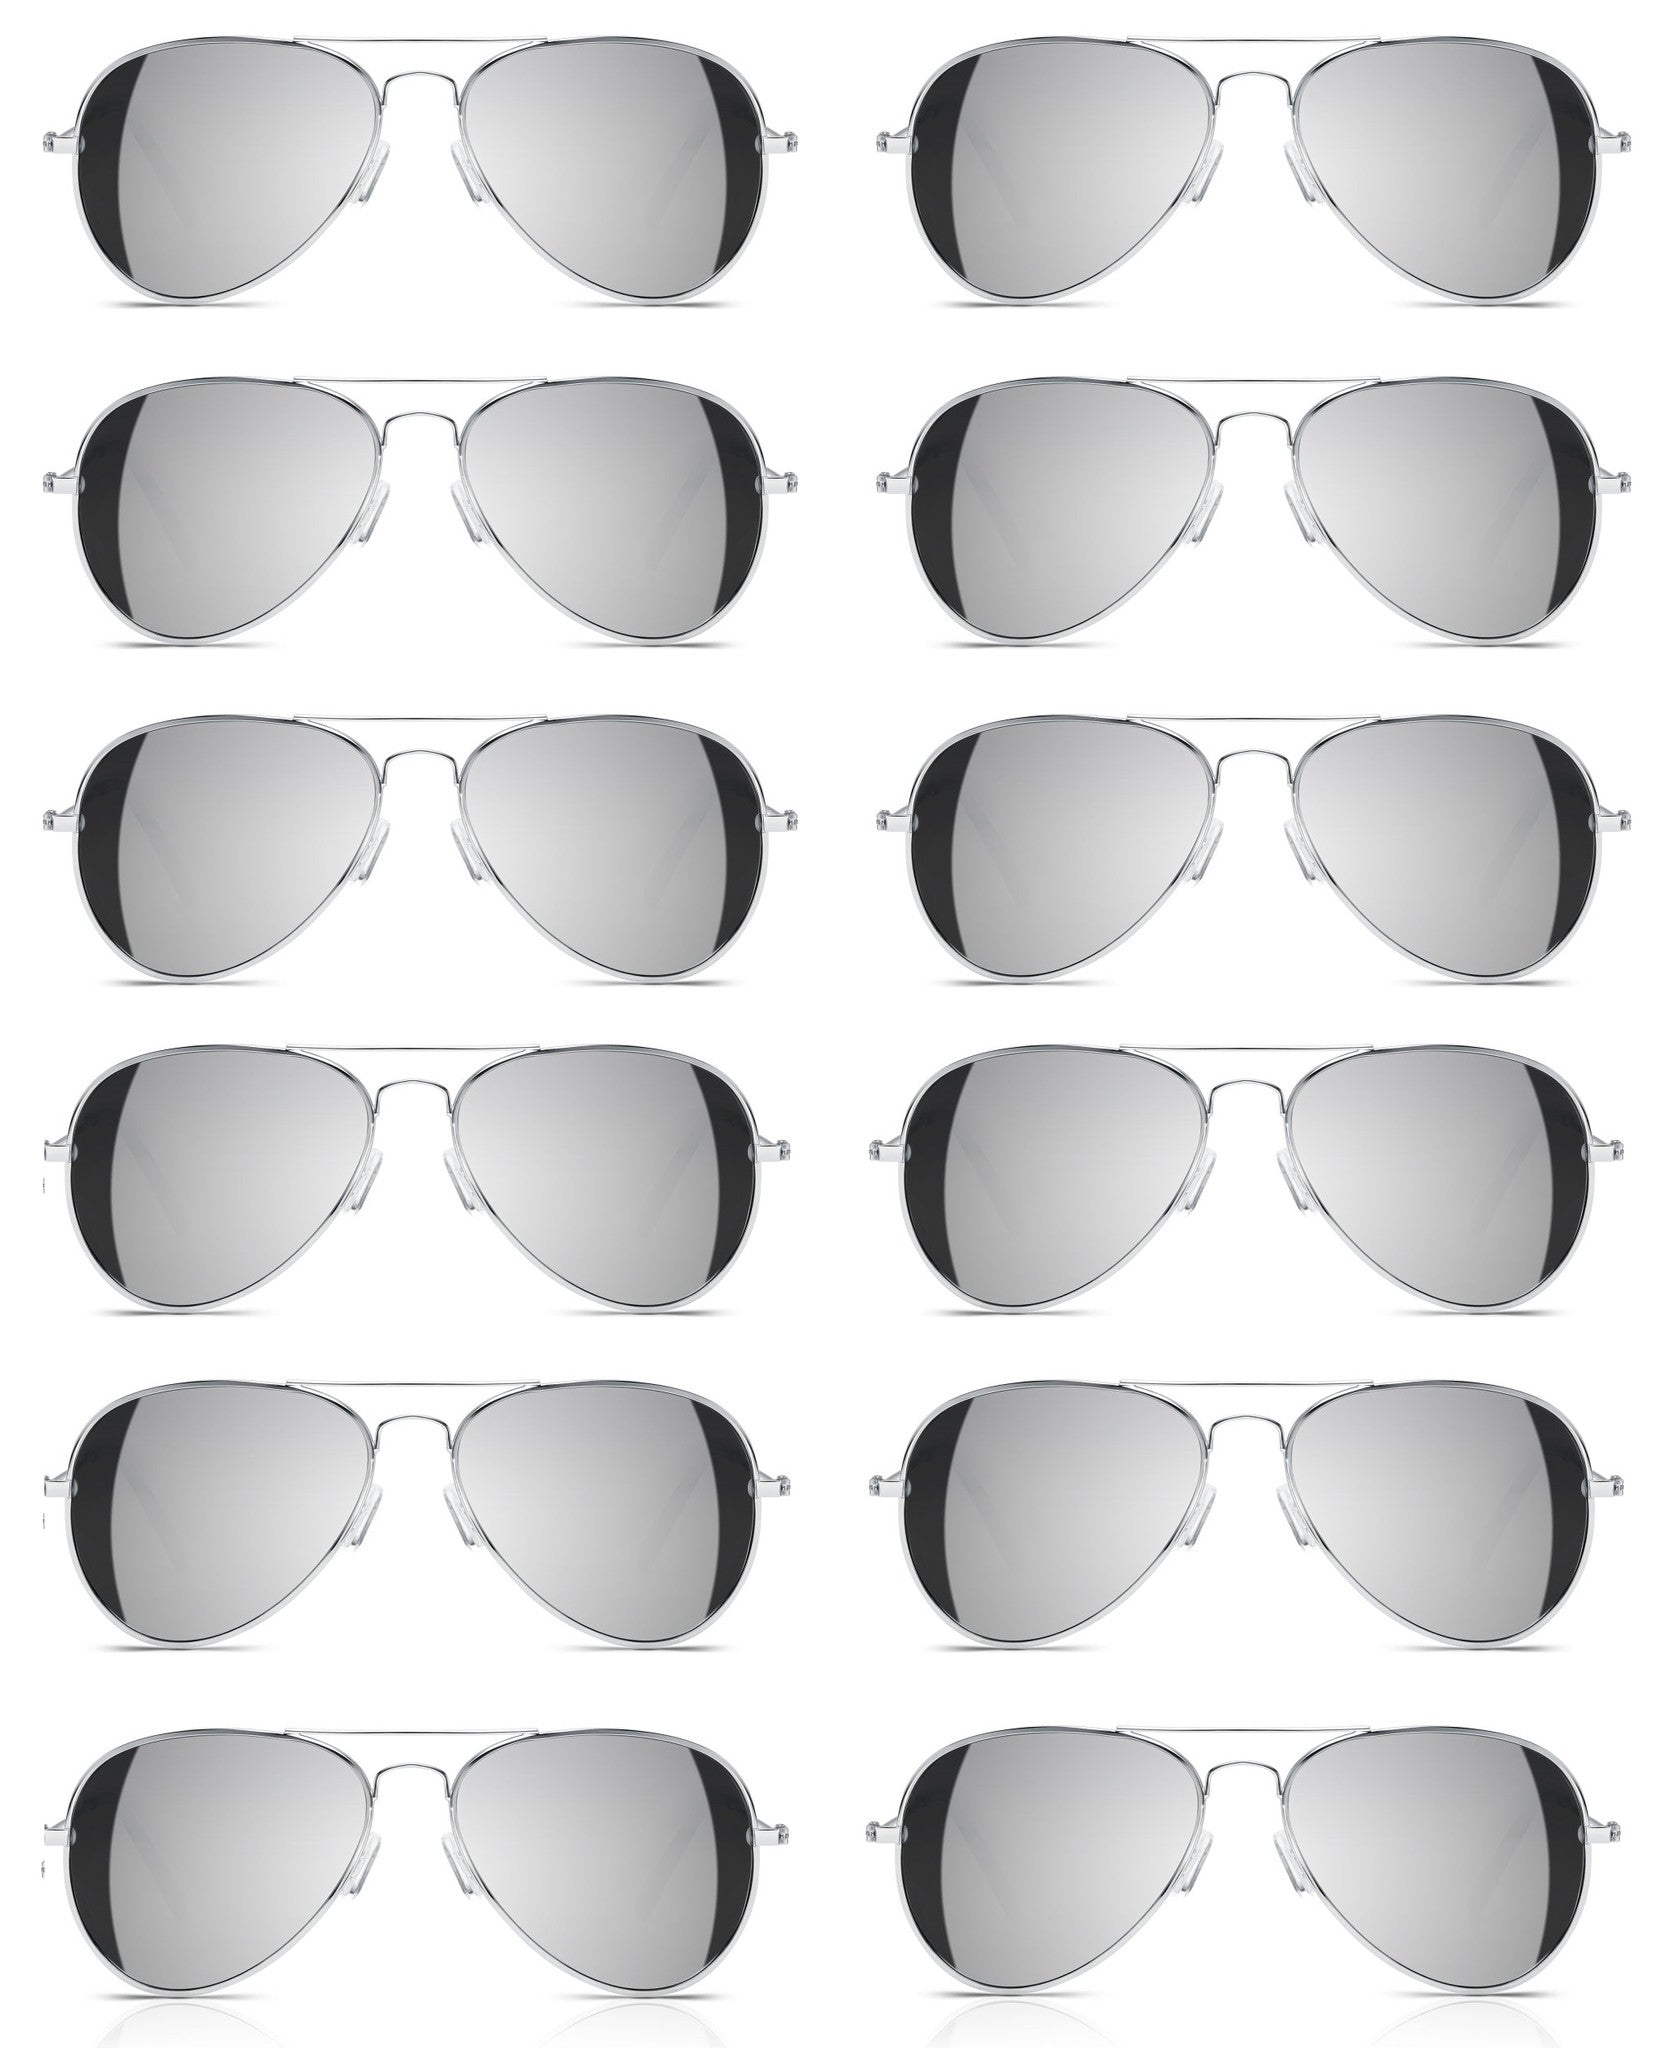 *LOT OF 24* Full Mirror Aviator Sunglasses w/ Metal Silver Frame Classic Retro - Neon Nation